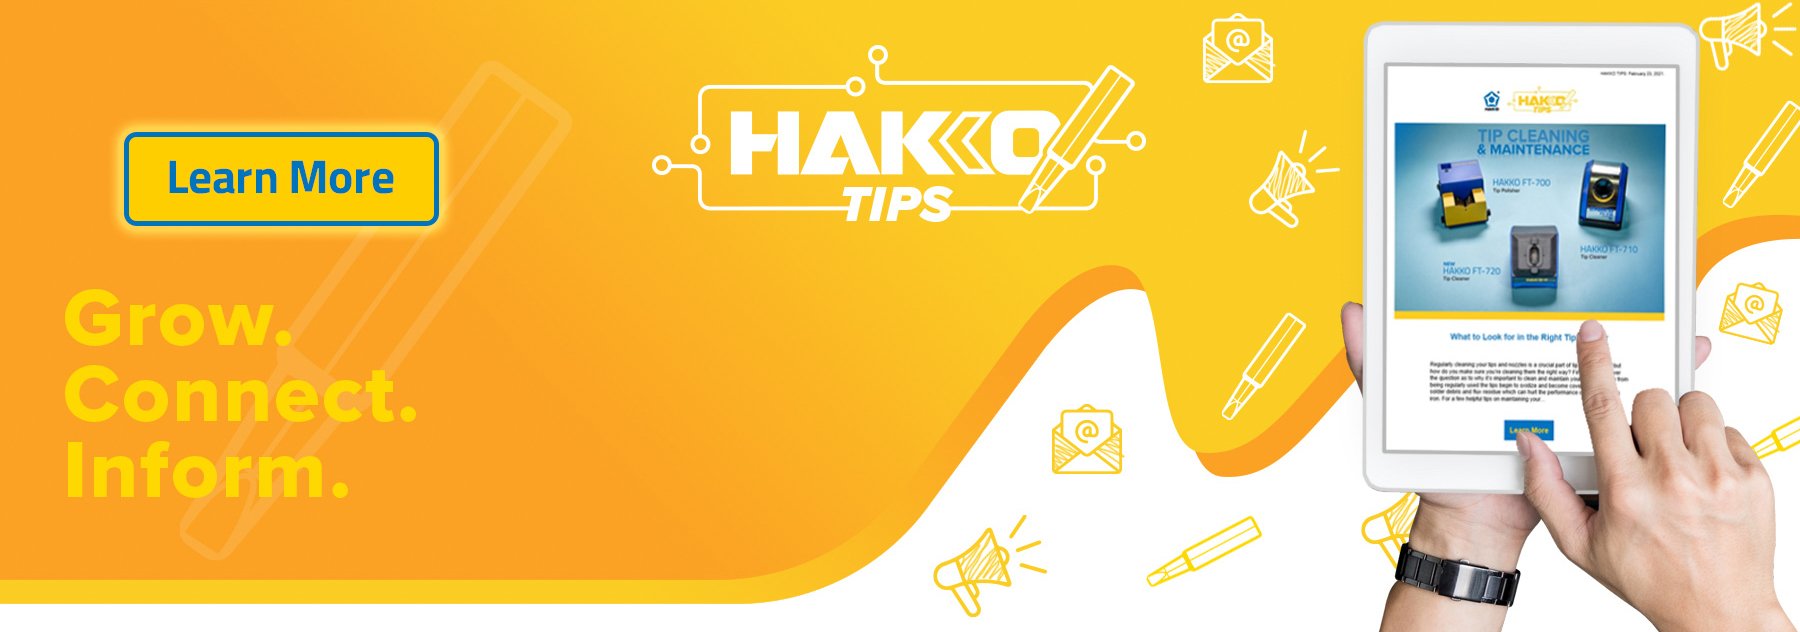 Hakko Tips